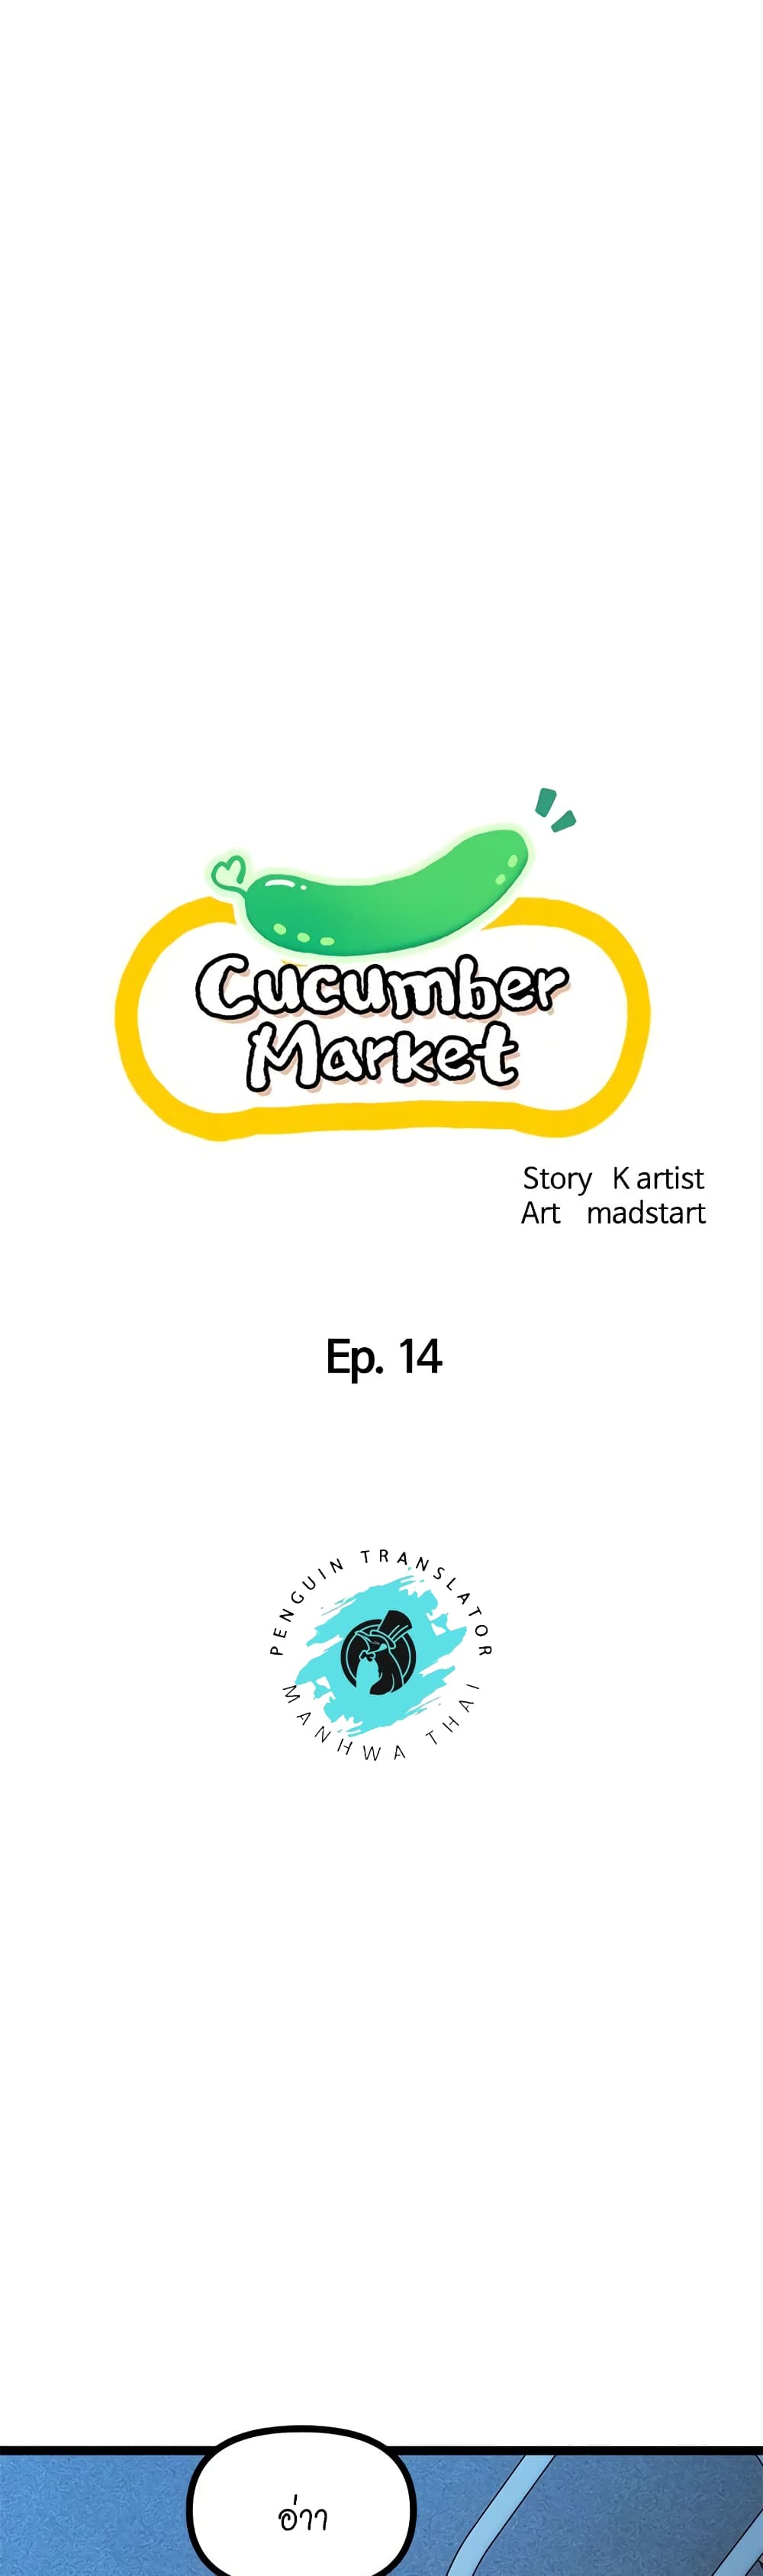 Cucumber Market 14-14